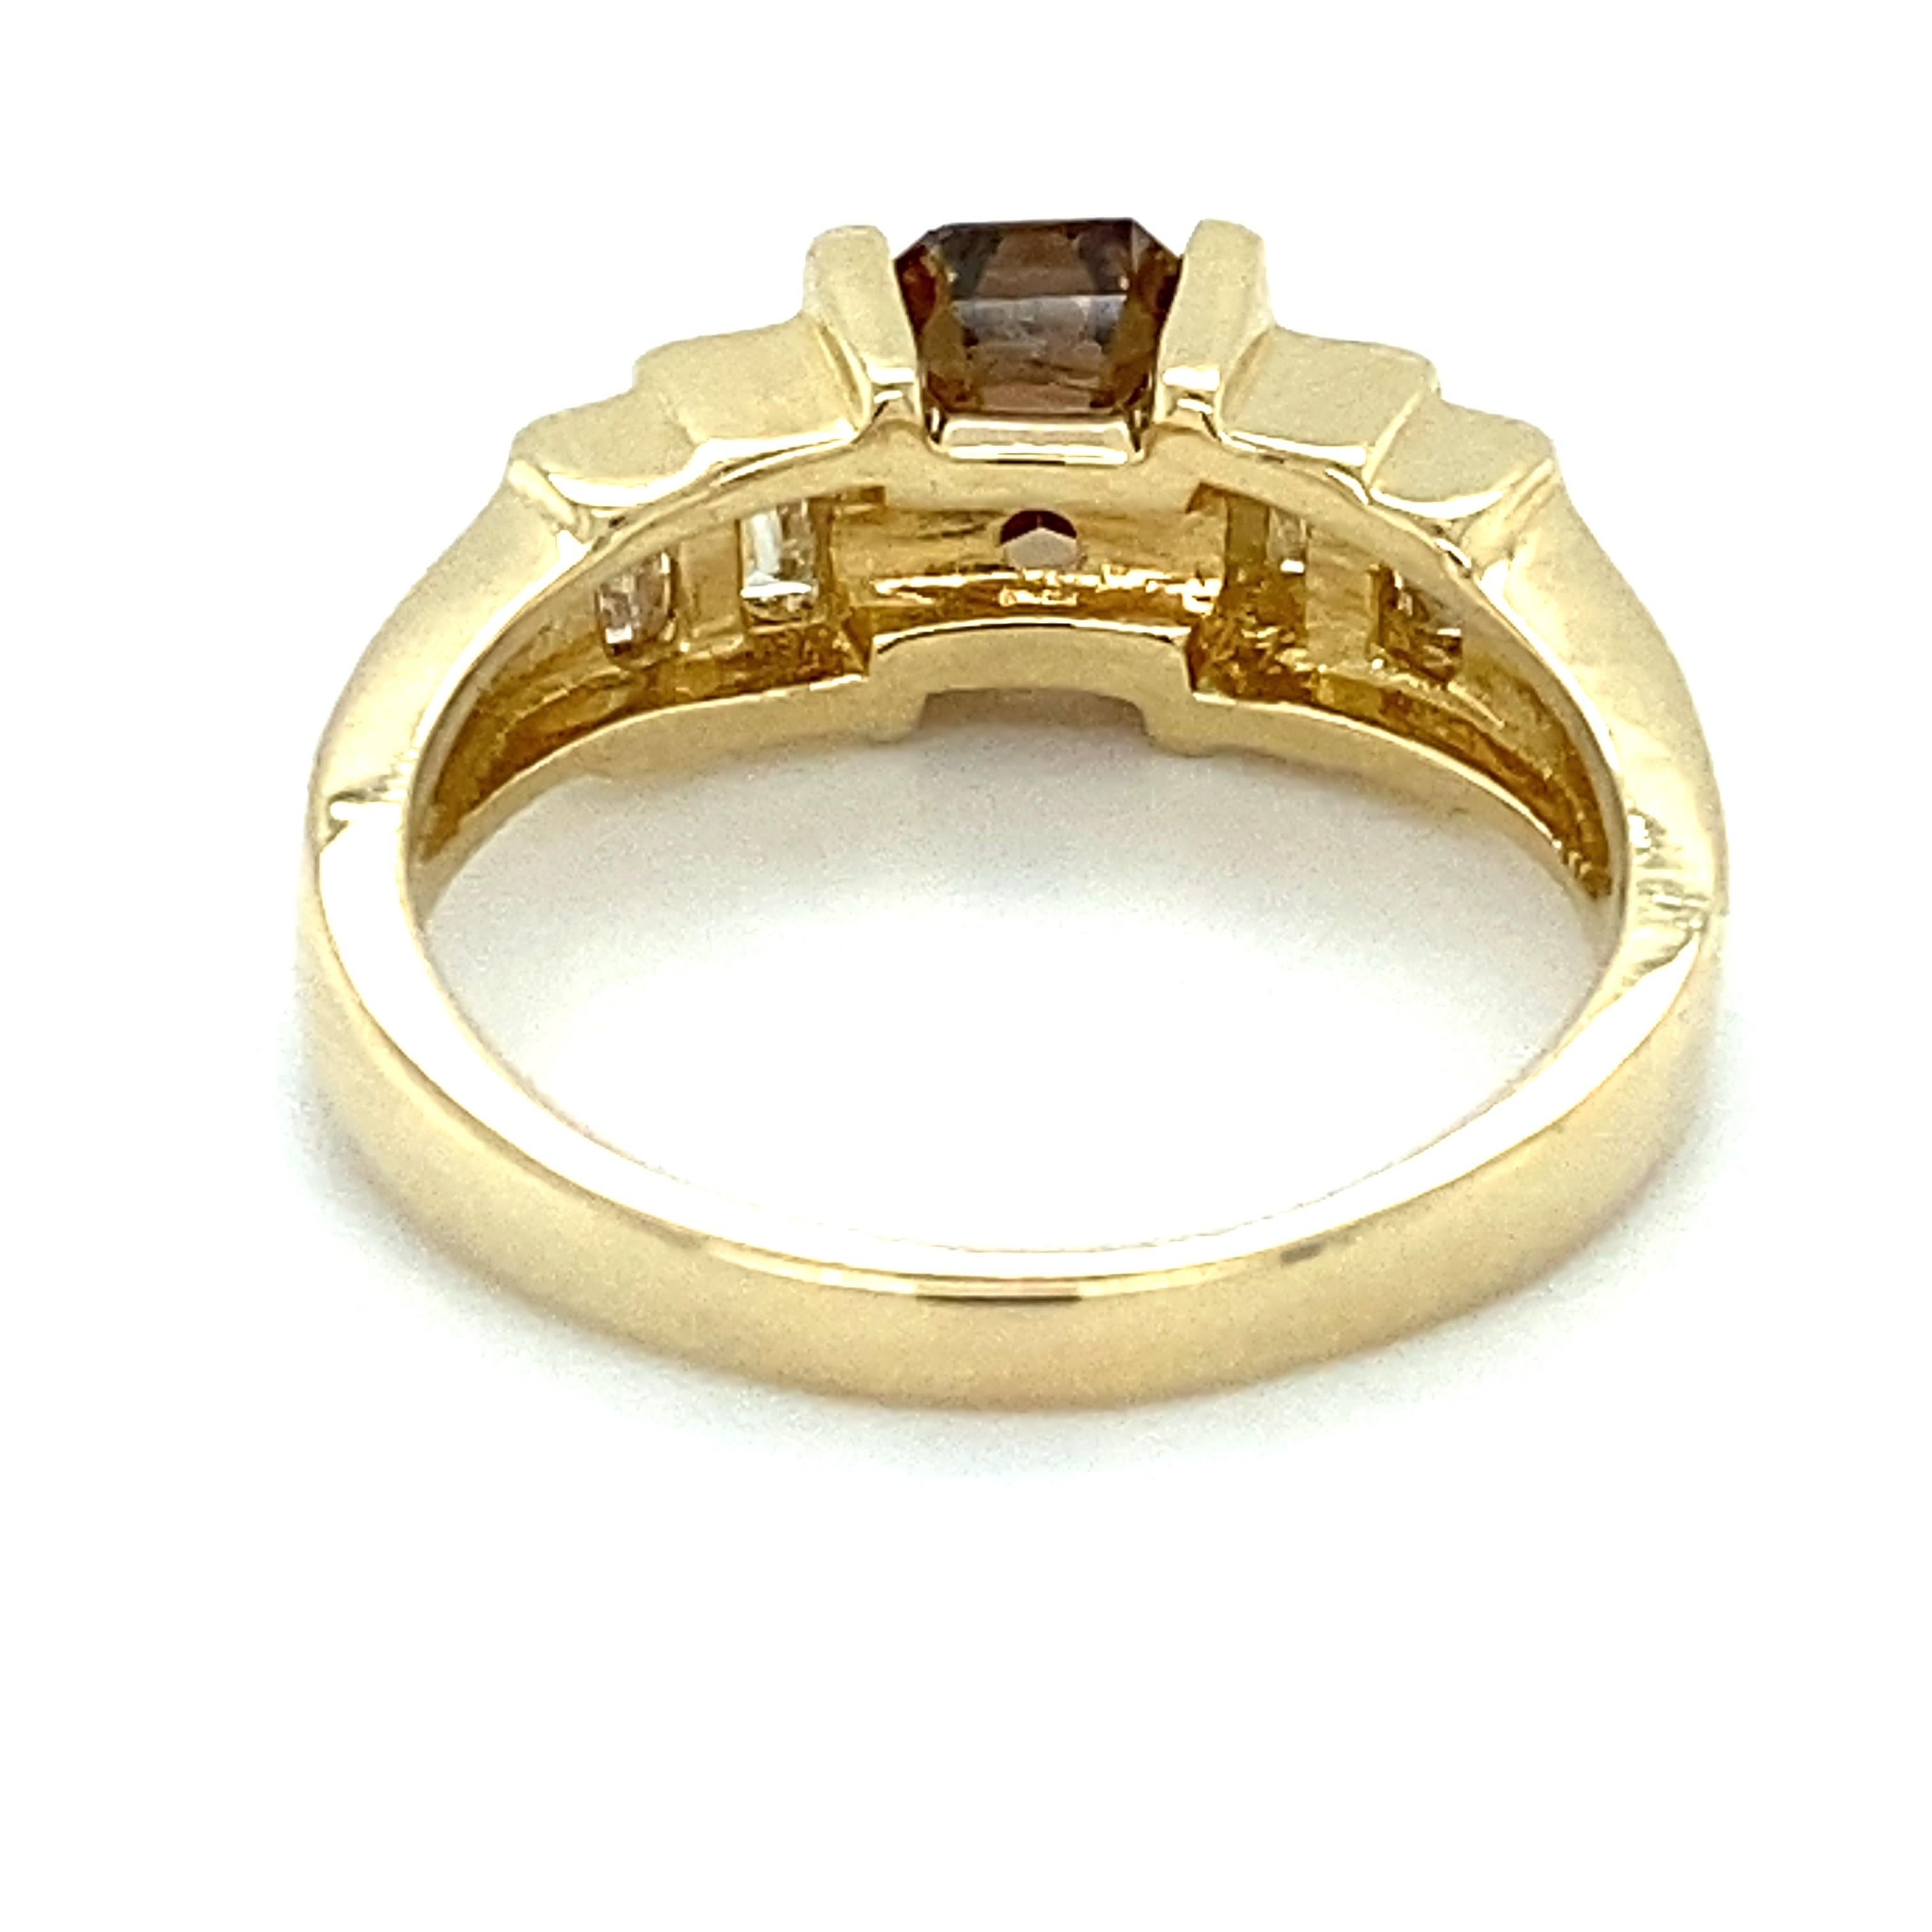 Contemporary 14 Karat 1.14 Carat Fancy Brown Diamond Ring